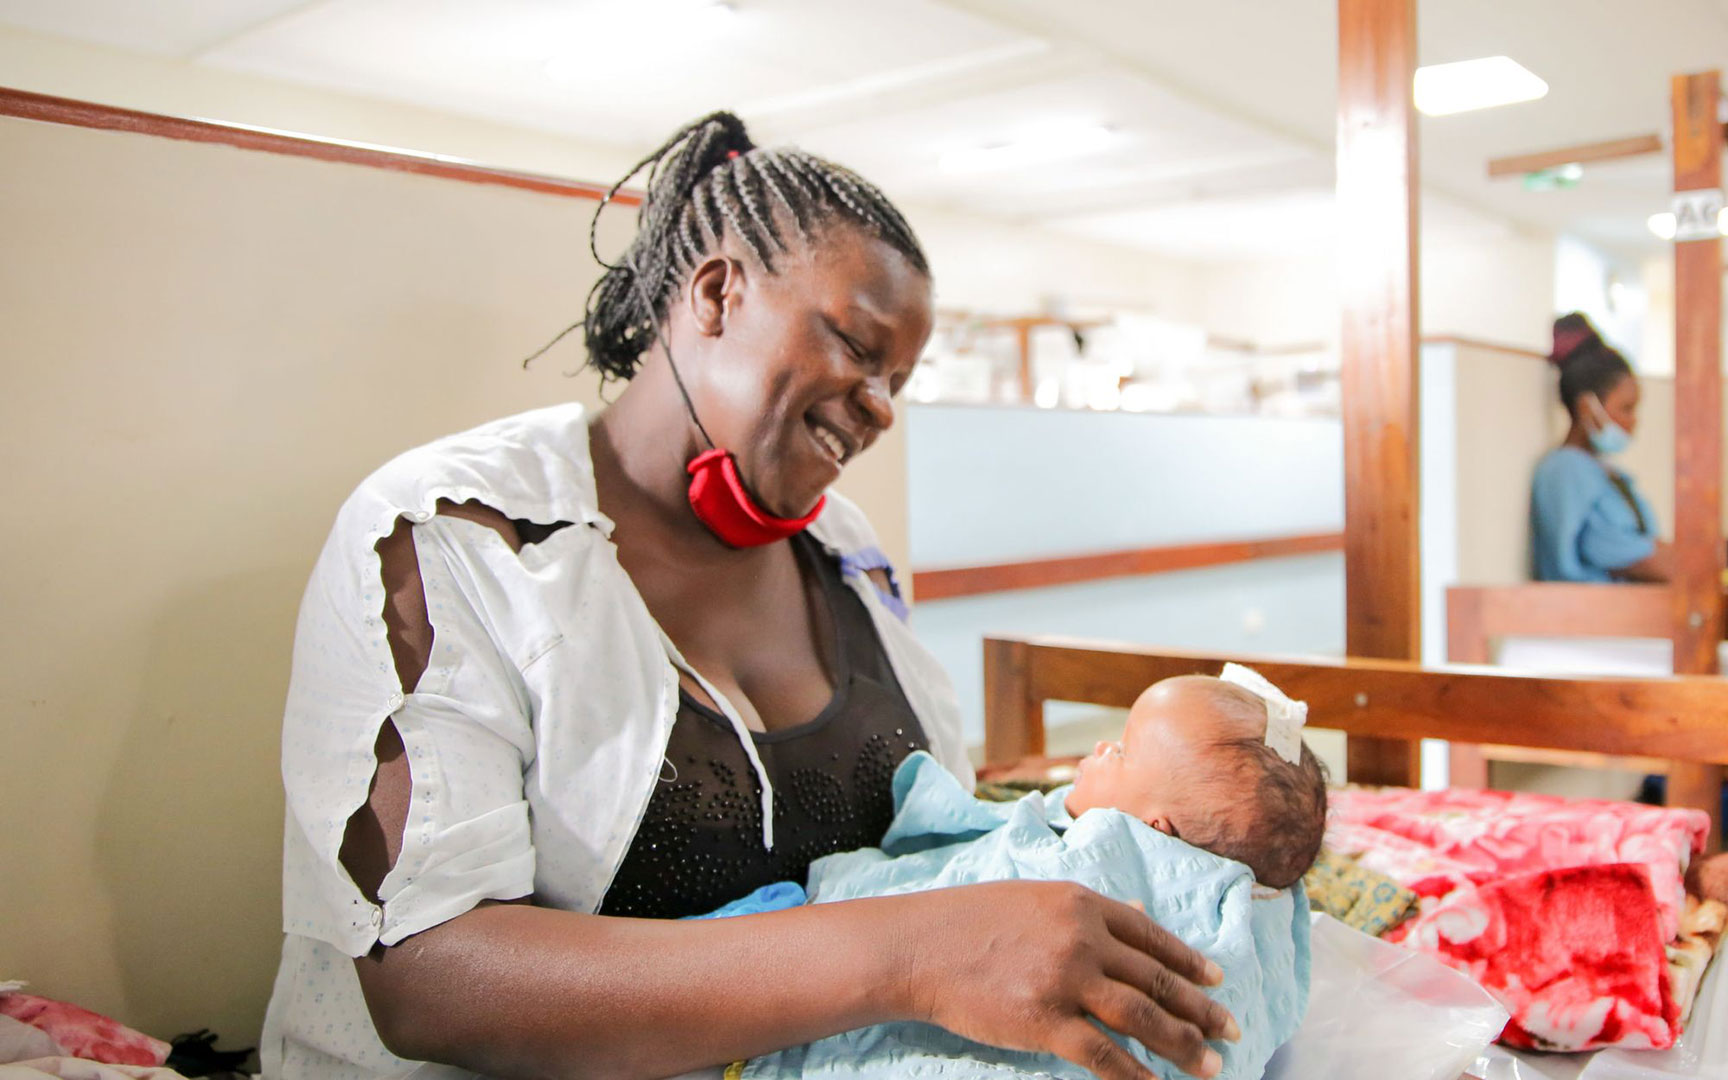 Economic burden of neonatal sepsis in sub-Saharan Africa